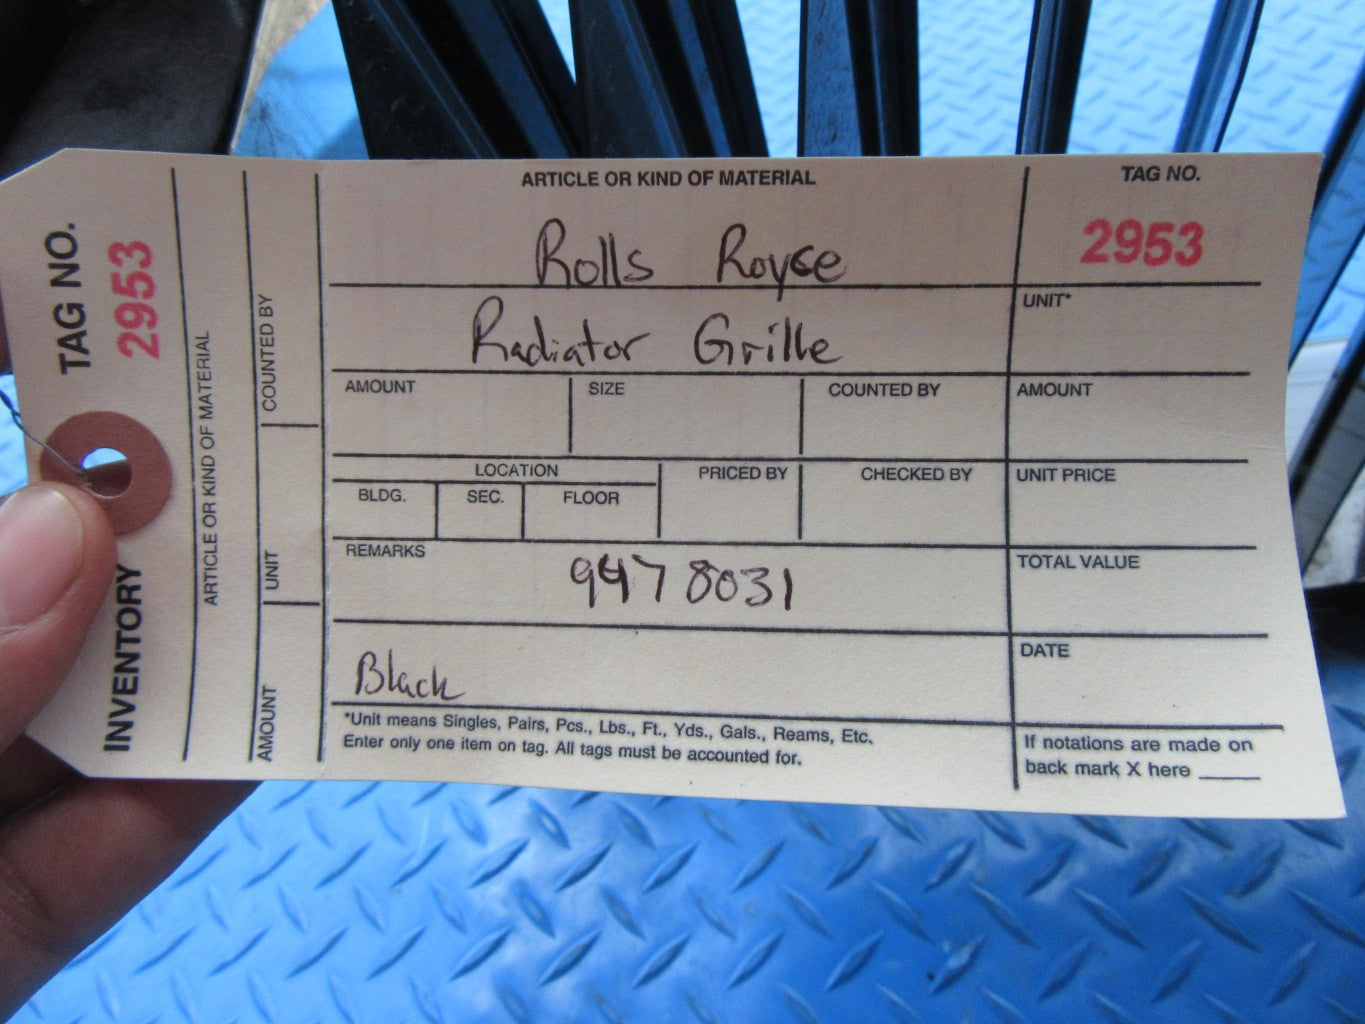 Rolls Royce Ghost Wraith Dawn Black Badge radiator grille #2953